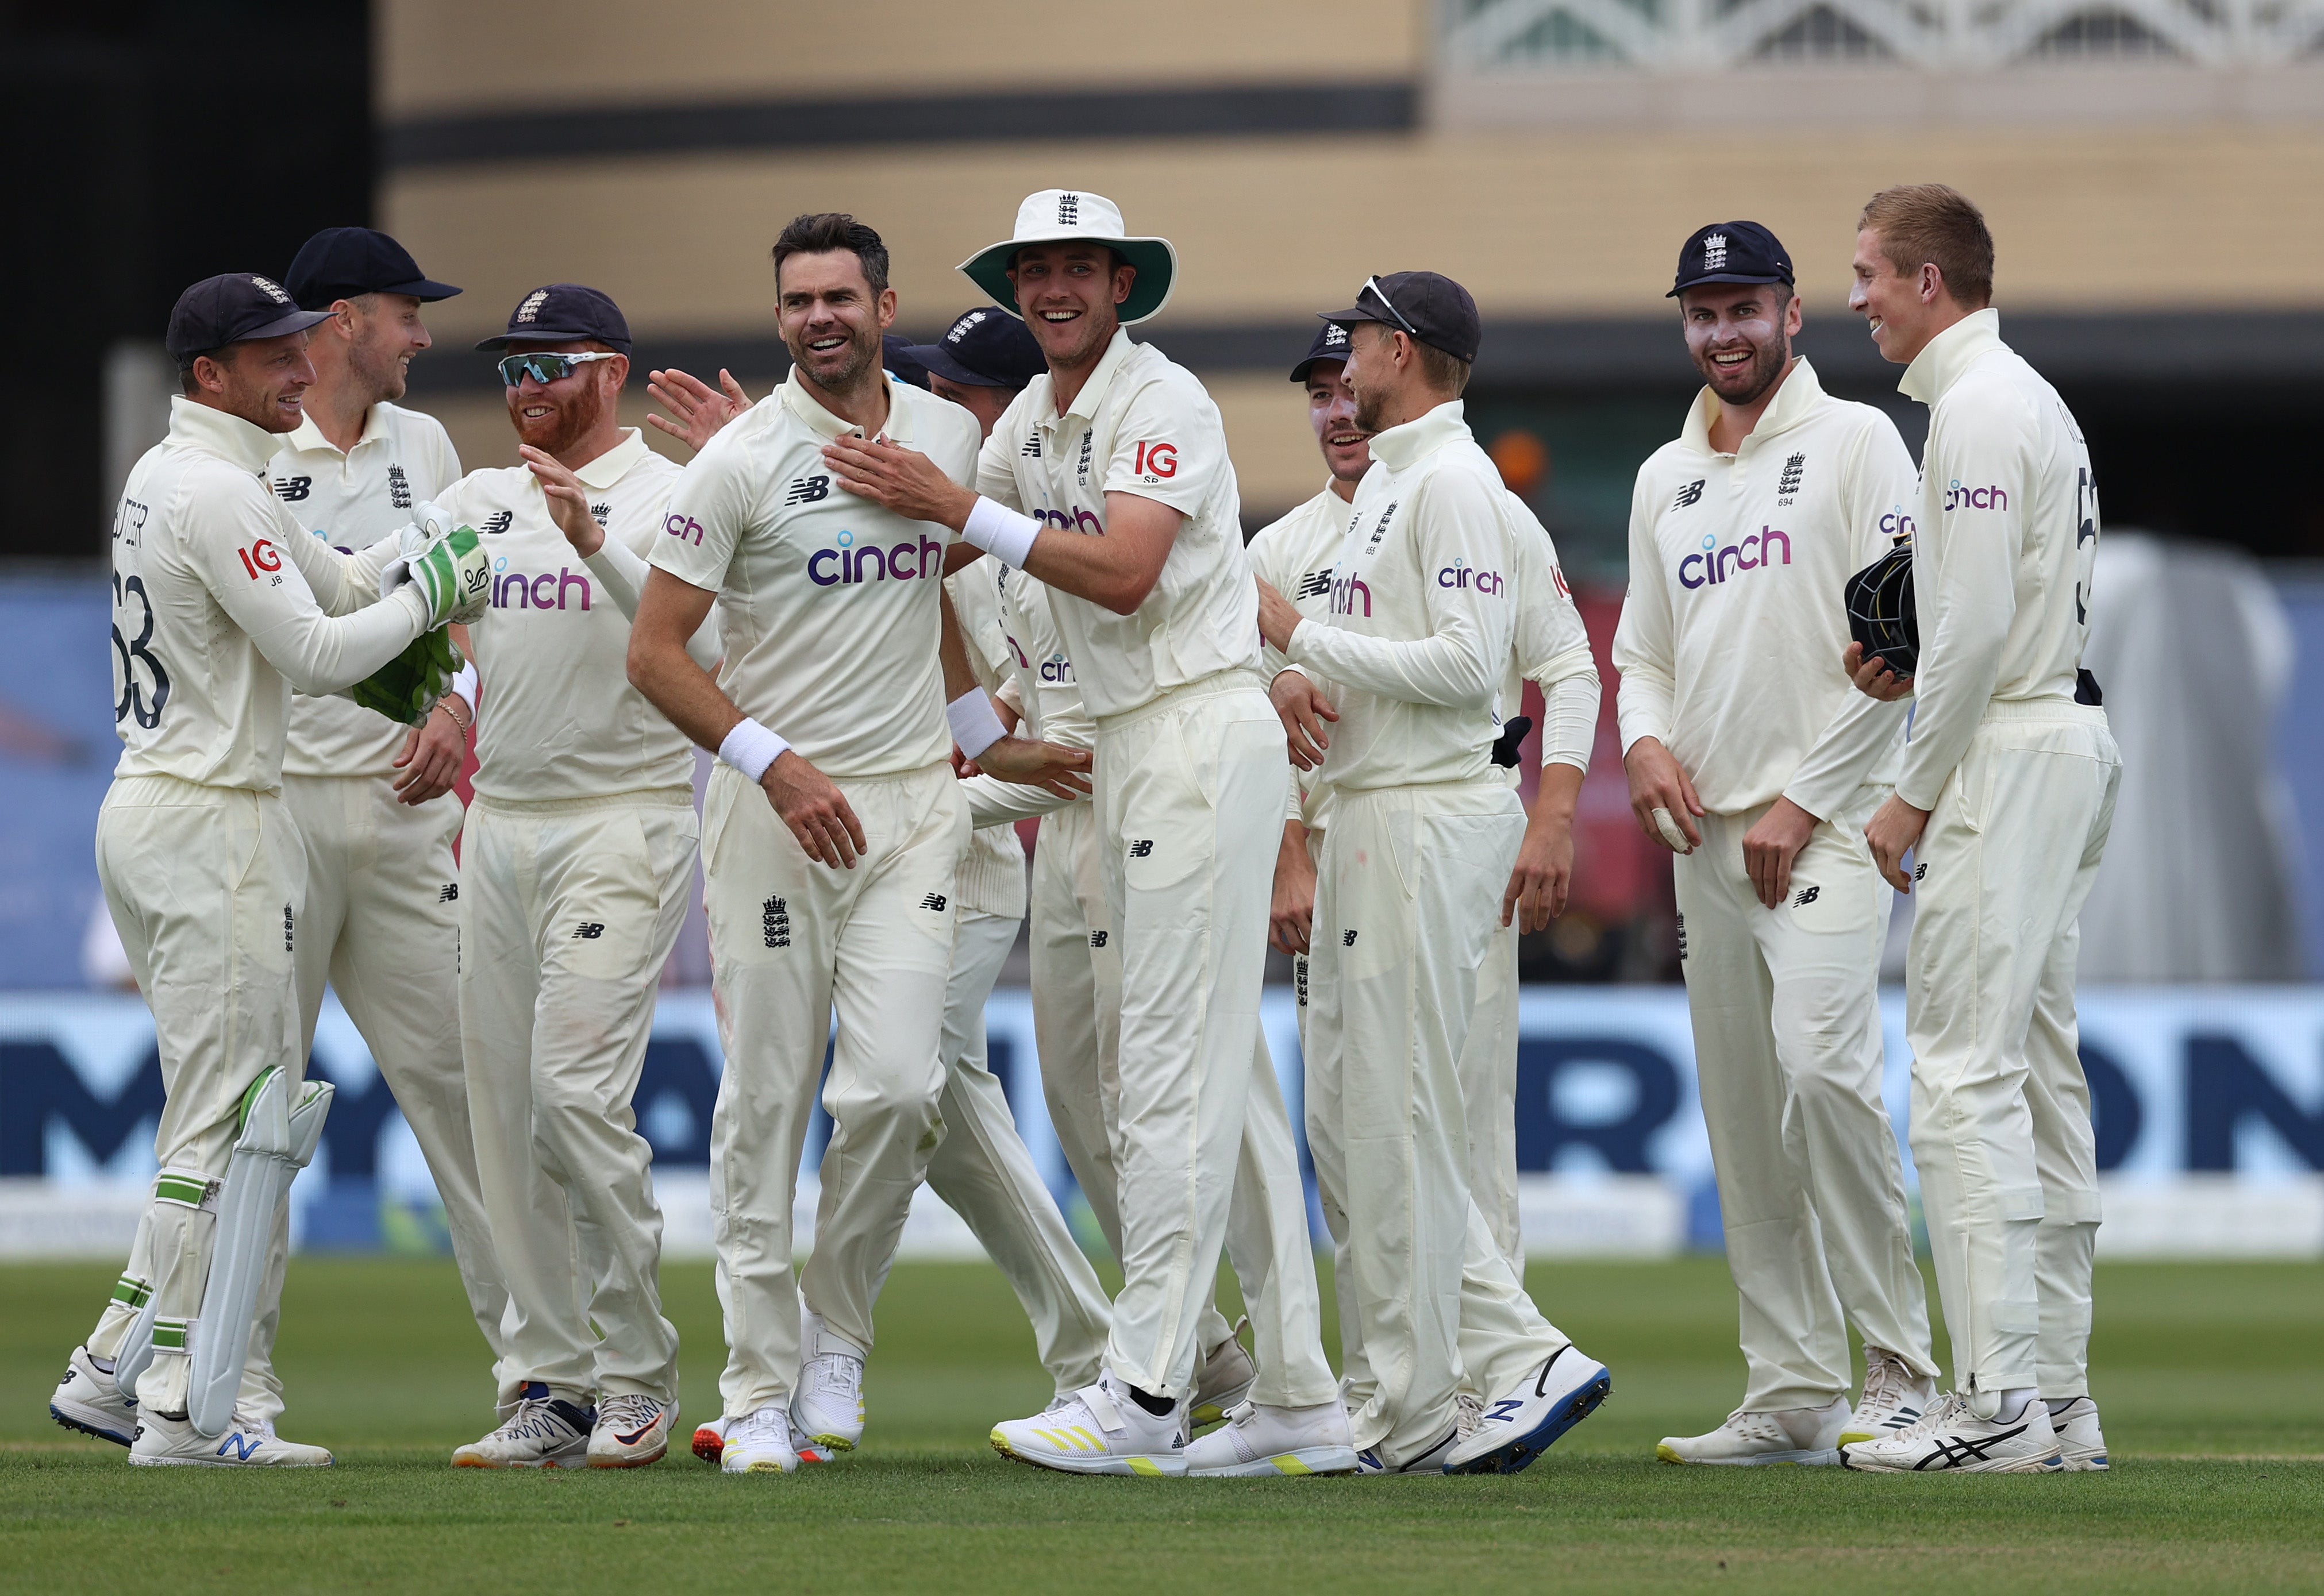 Anderson of England celebrates taking the wicket of Virat Kohli